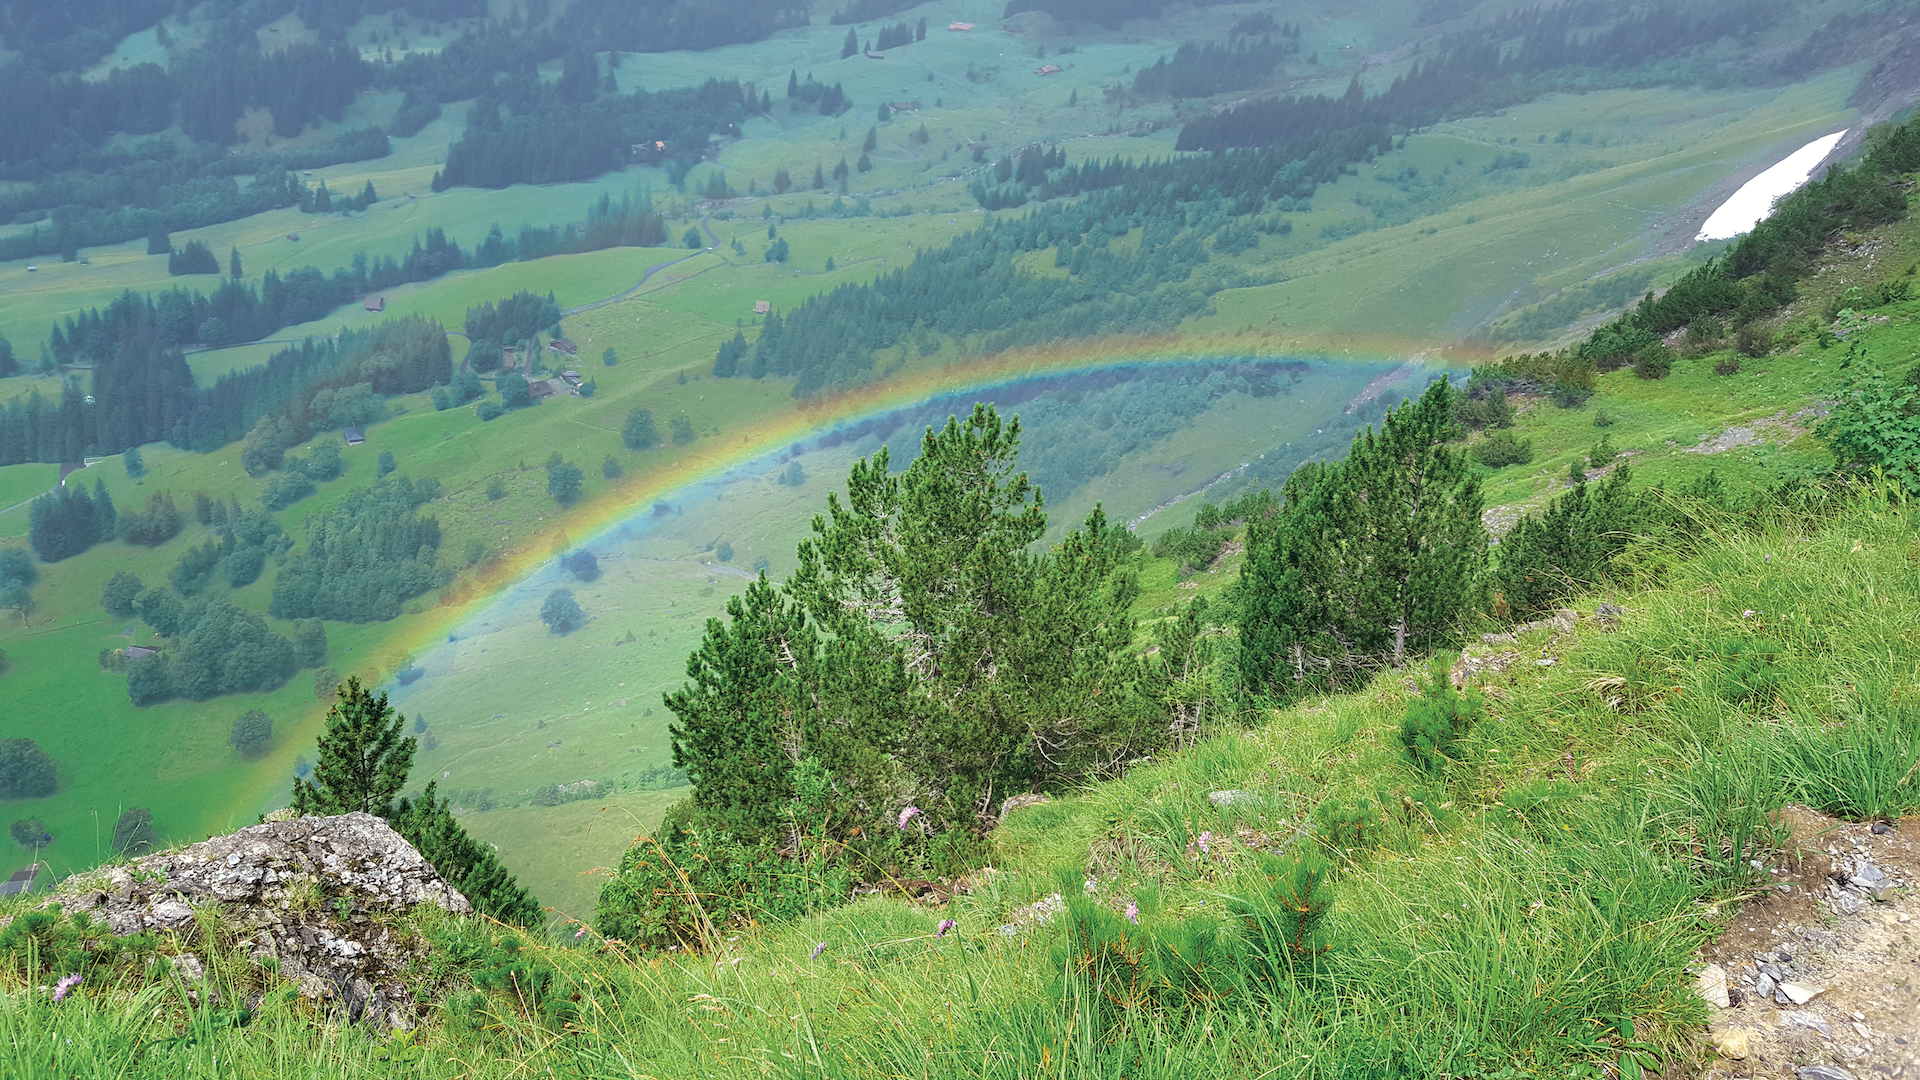 Terres Unsoeld'S Rainbow Photo, from her book Initiatique Trees